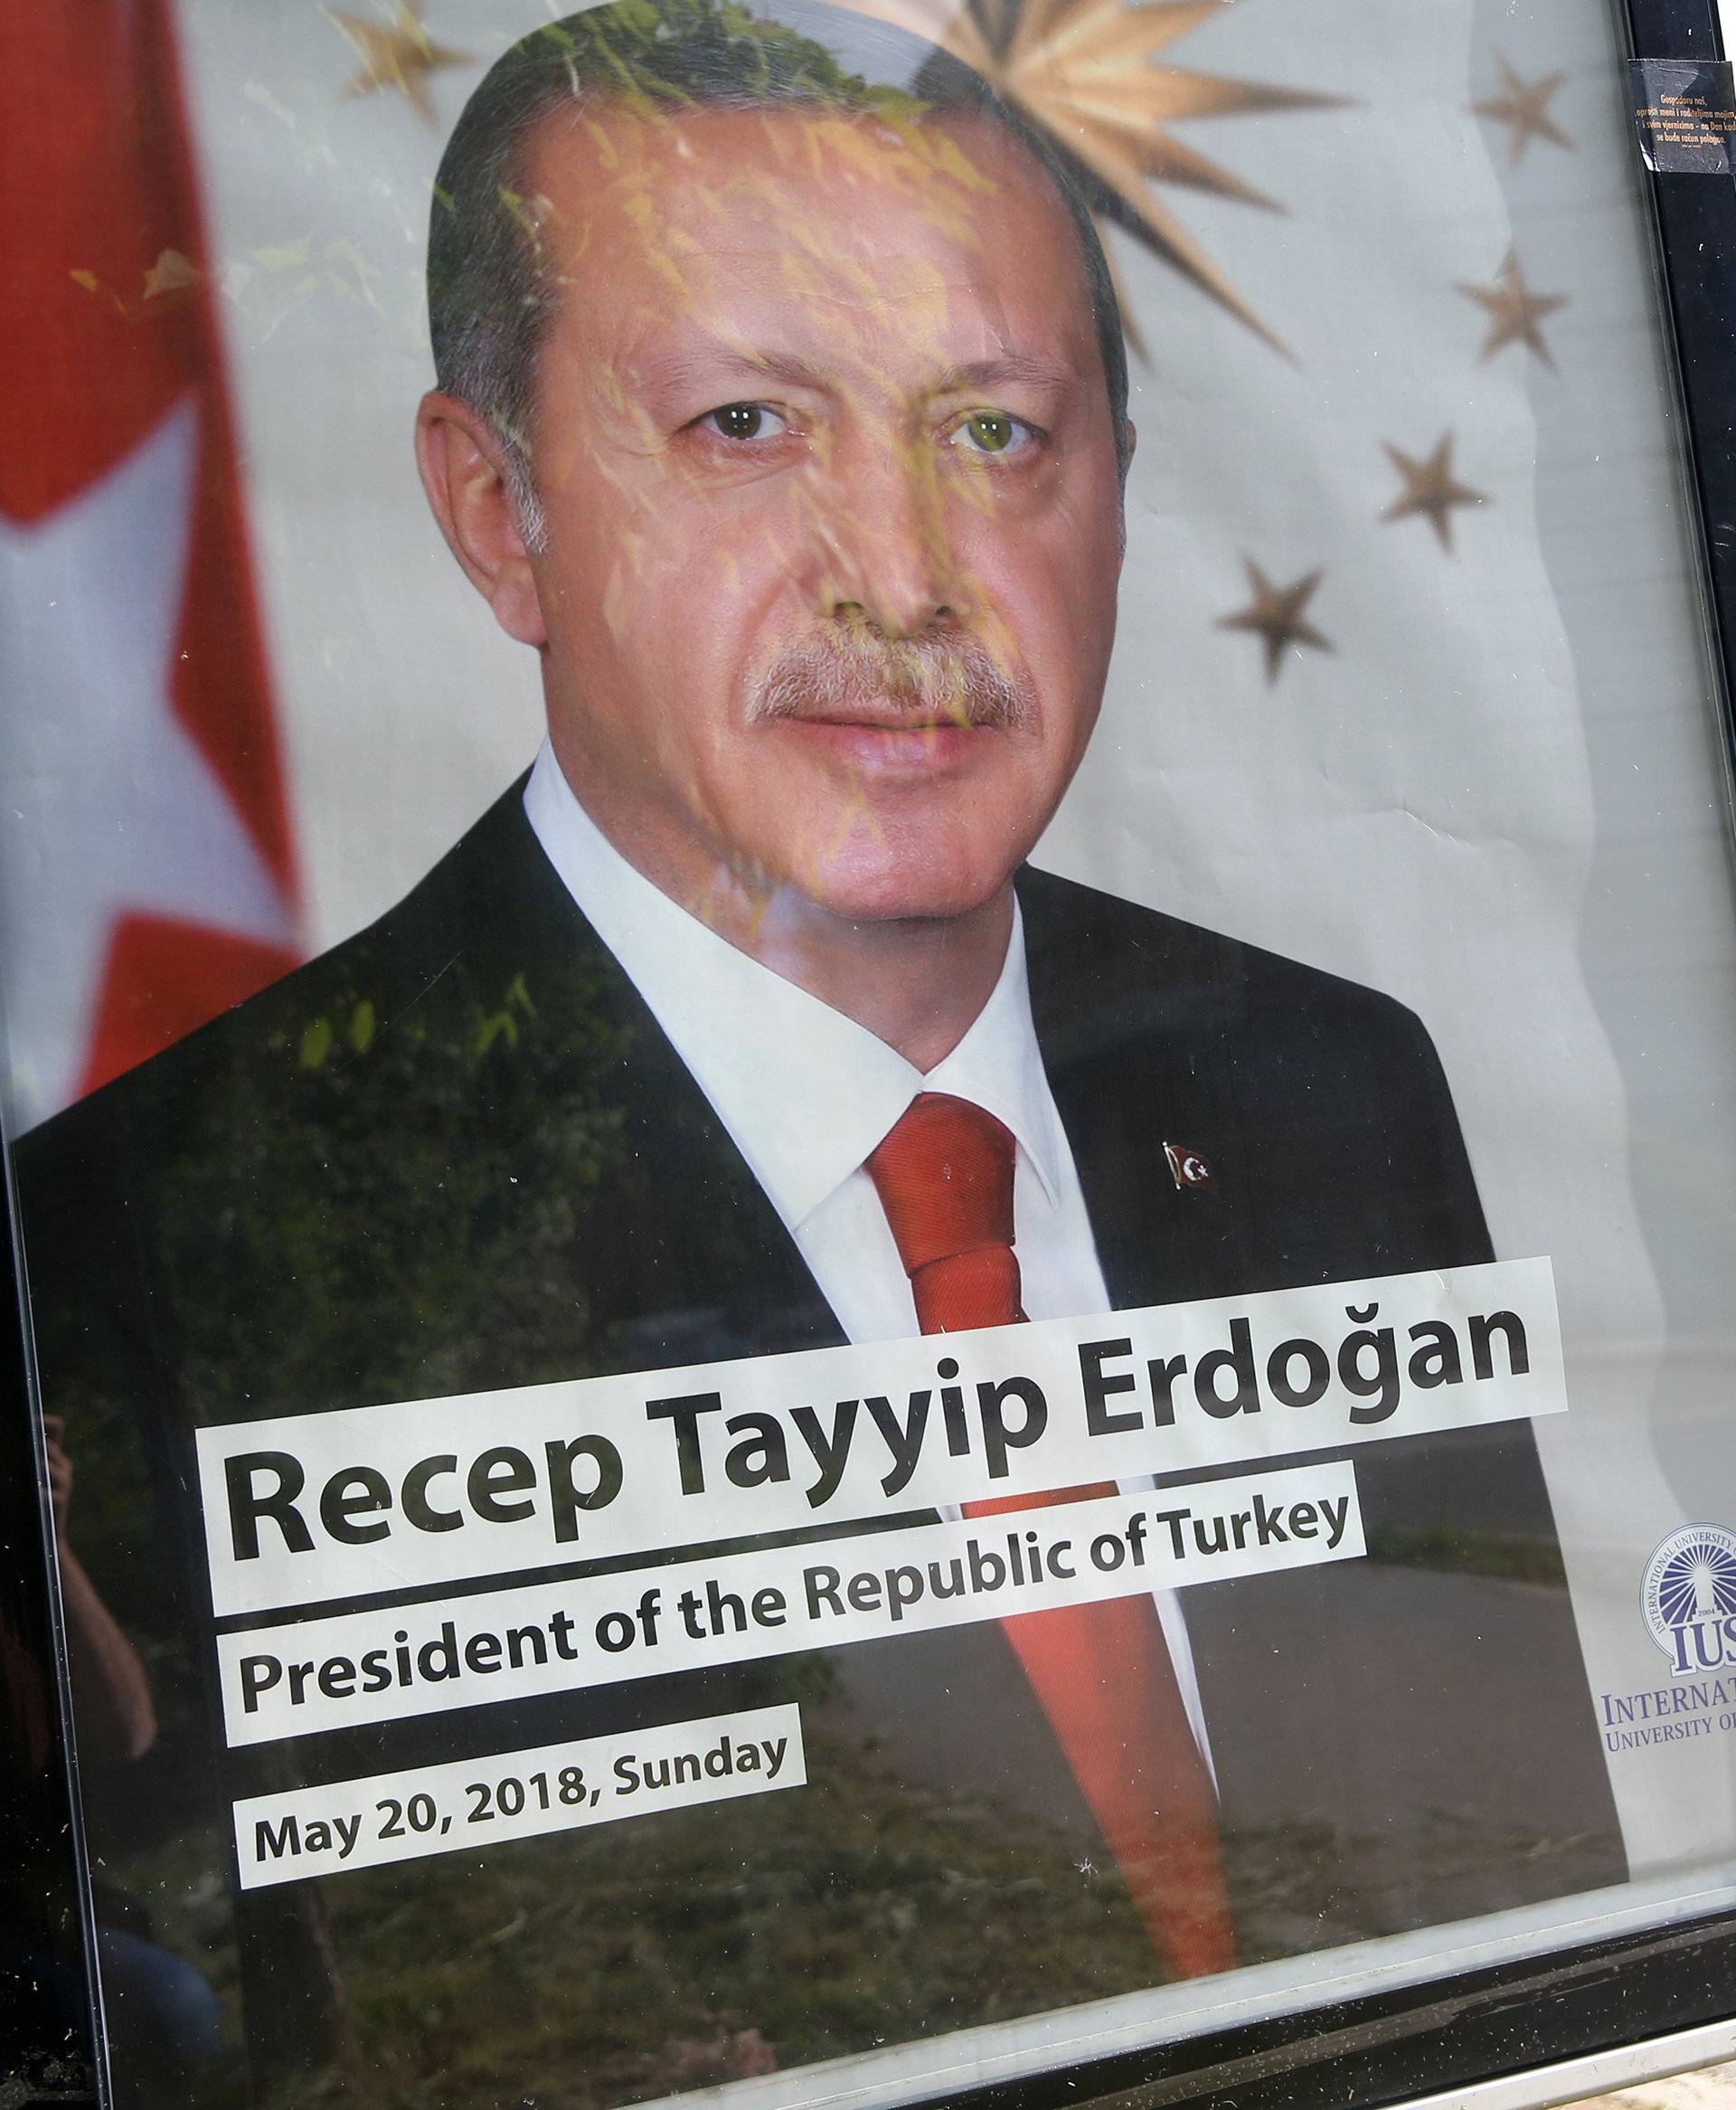 Turkey's President Tayyip Erdogan poster is seen in front of the International University of Sarajevo